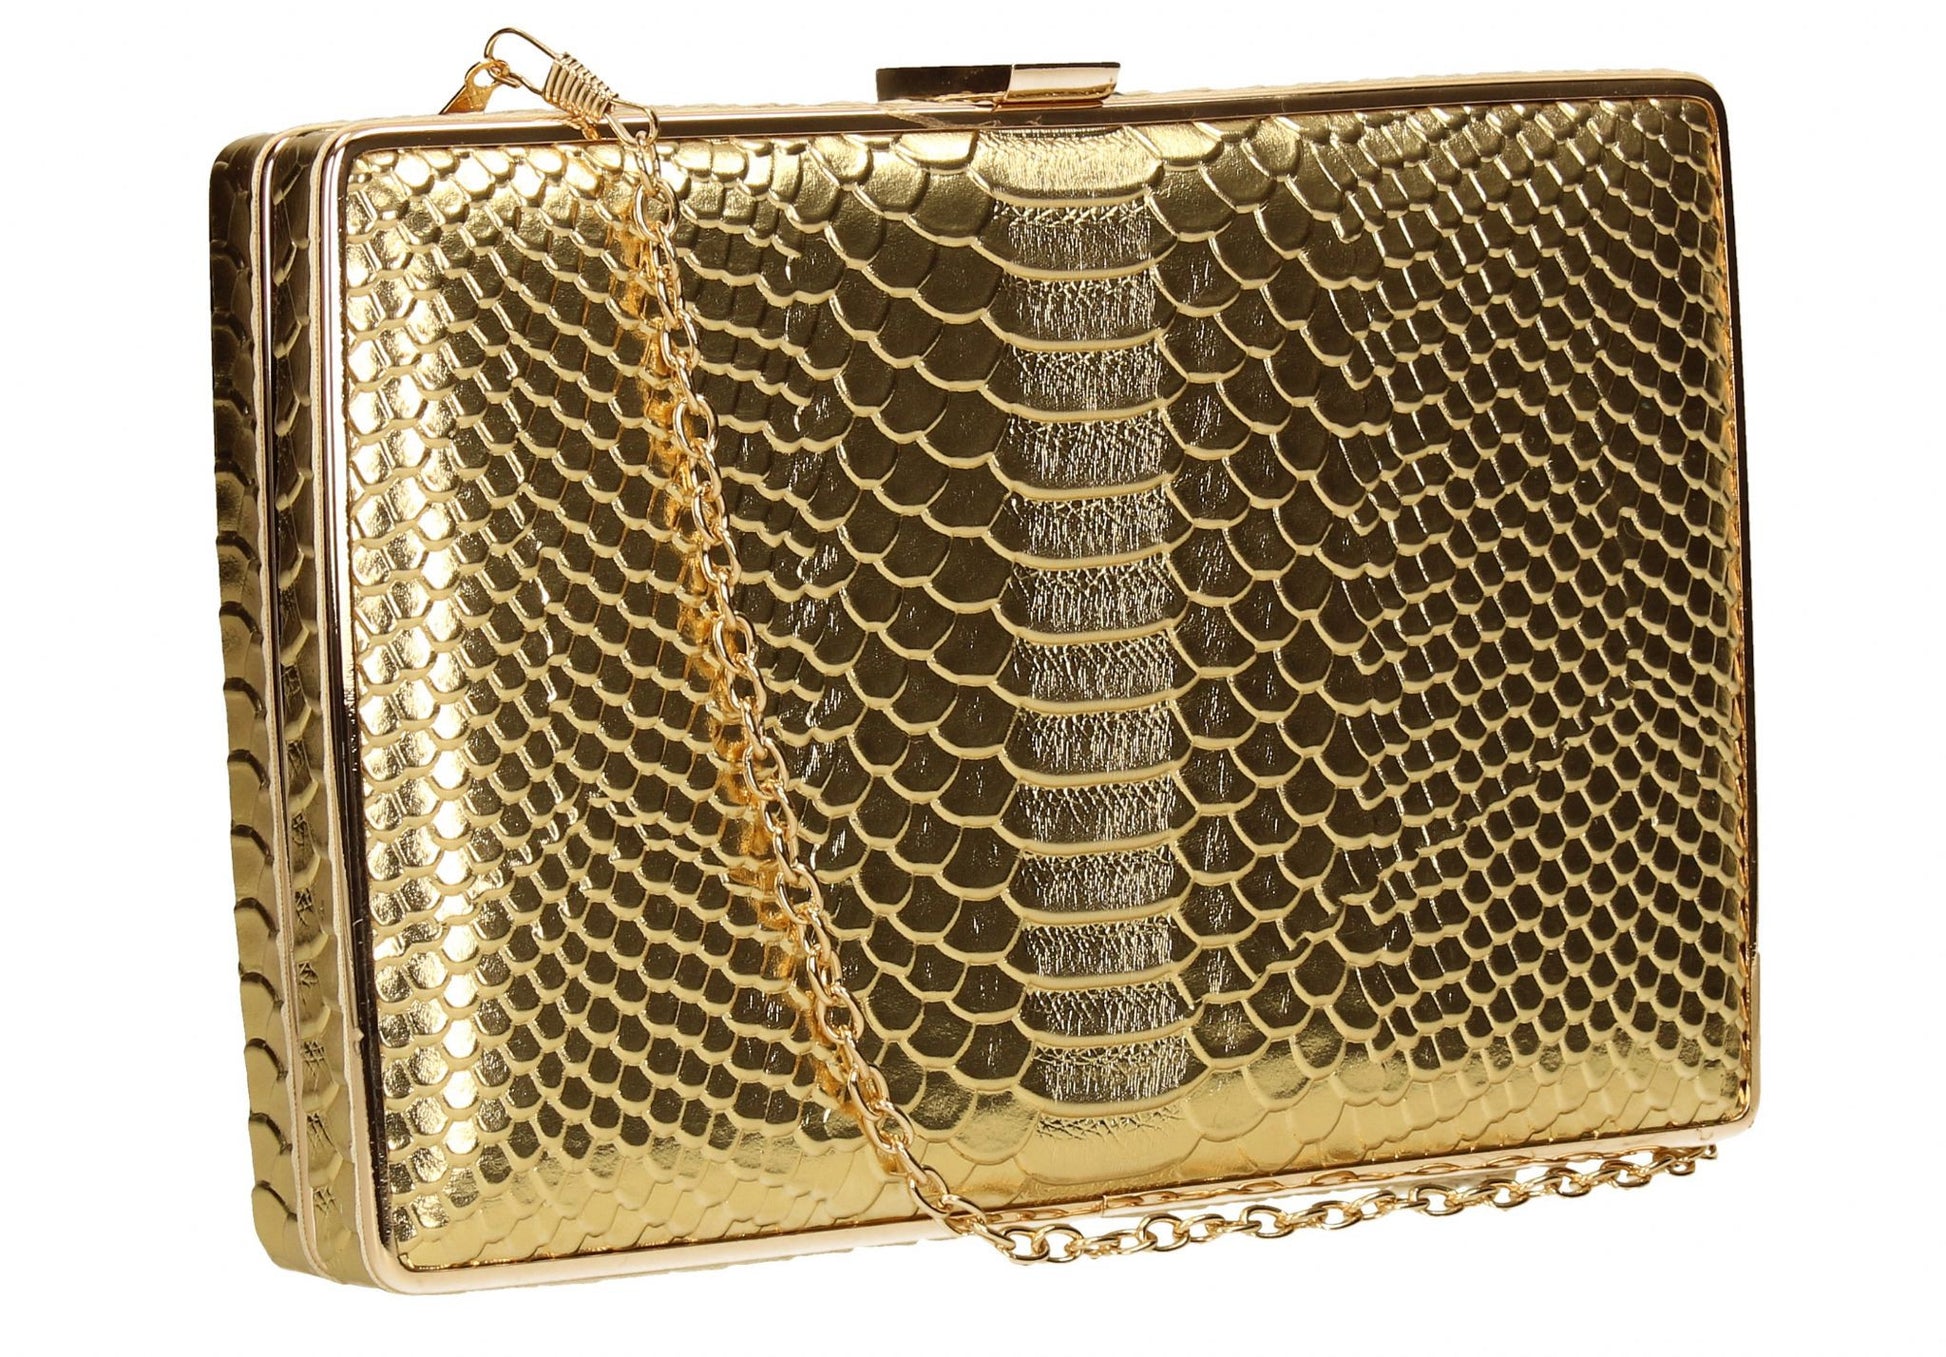 SWANKYSWANS Sandy Snakeskin Box Clutch Gold Cute Cheap Clutch Bag For Weddings School and Work